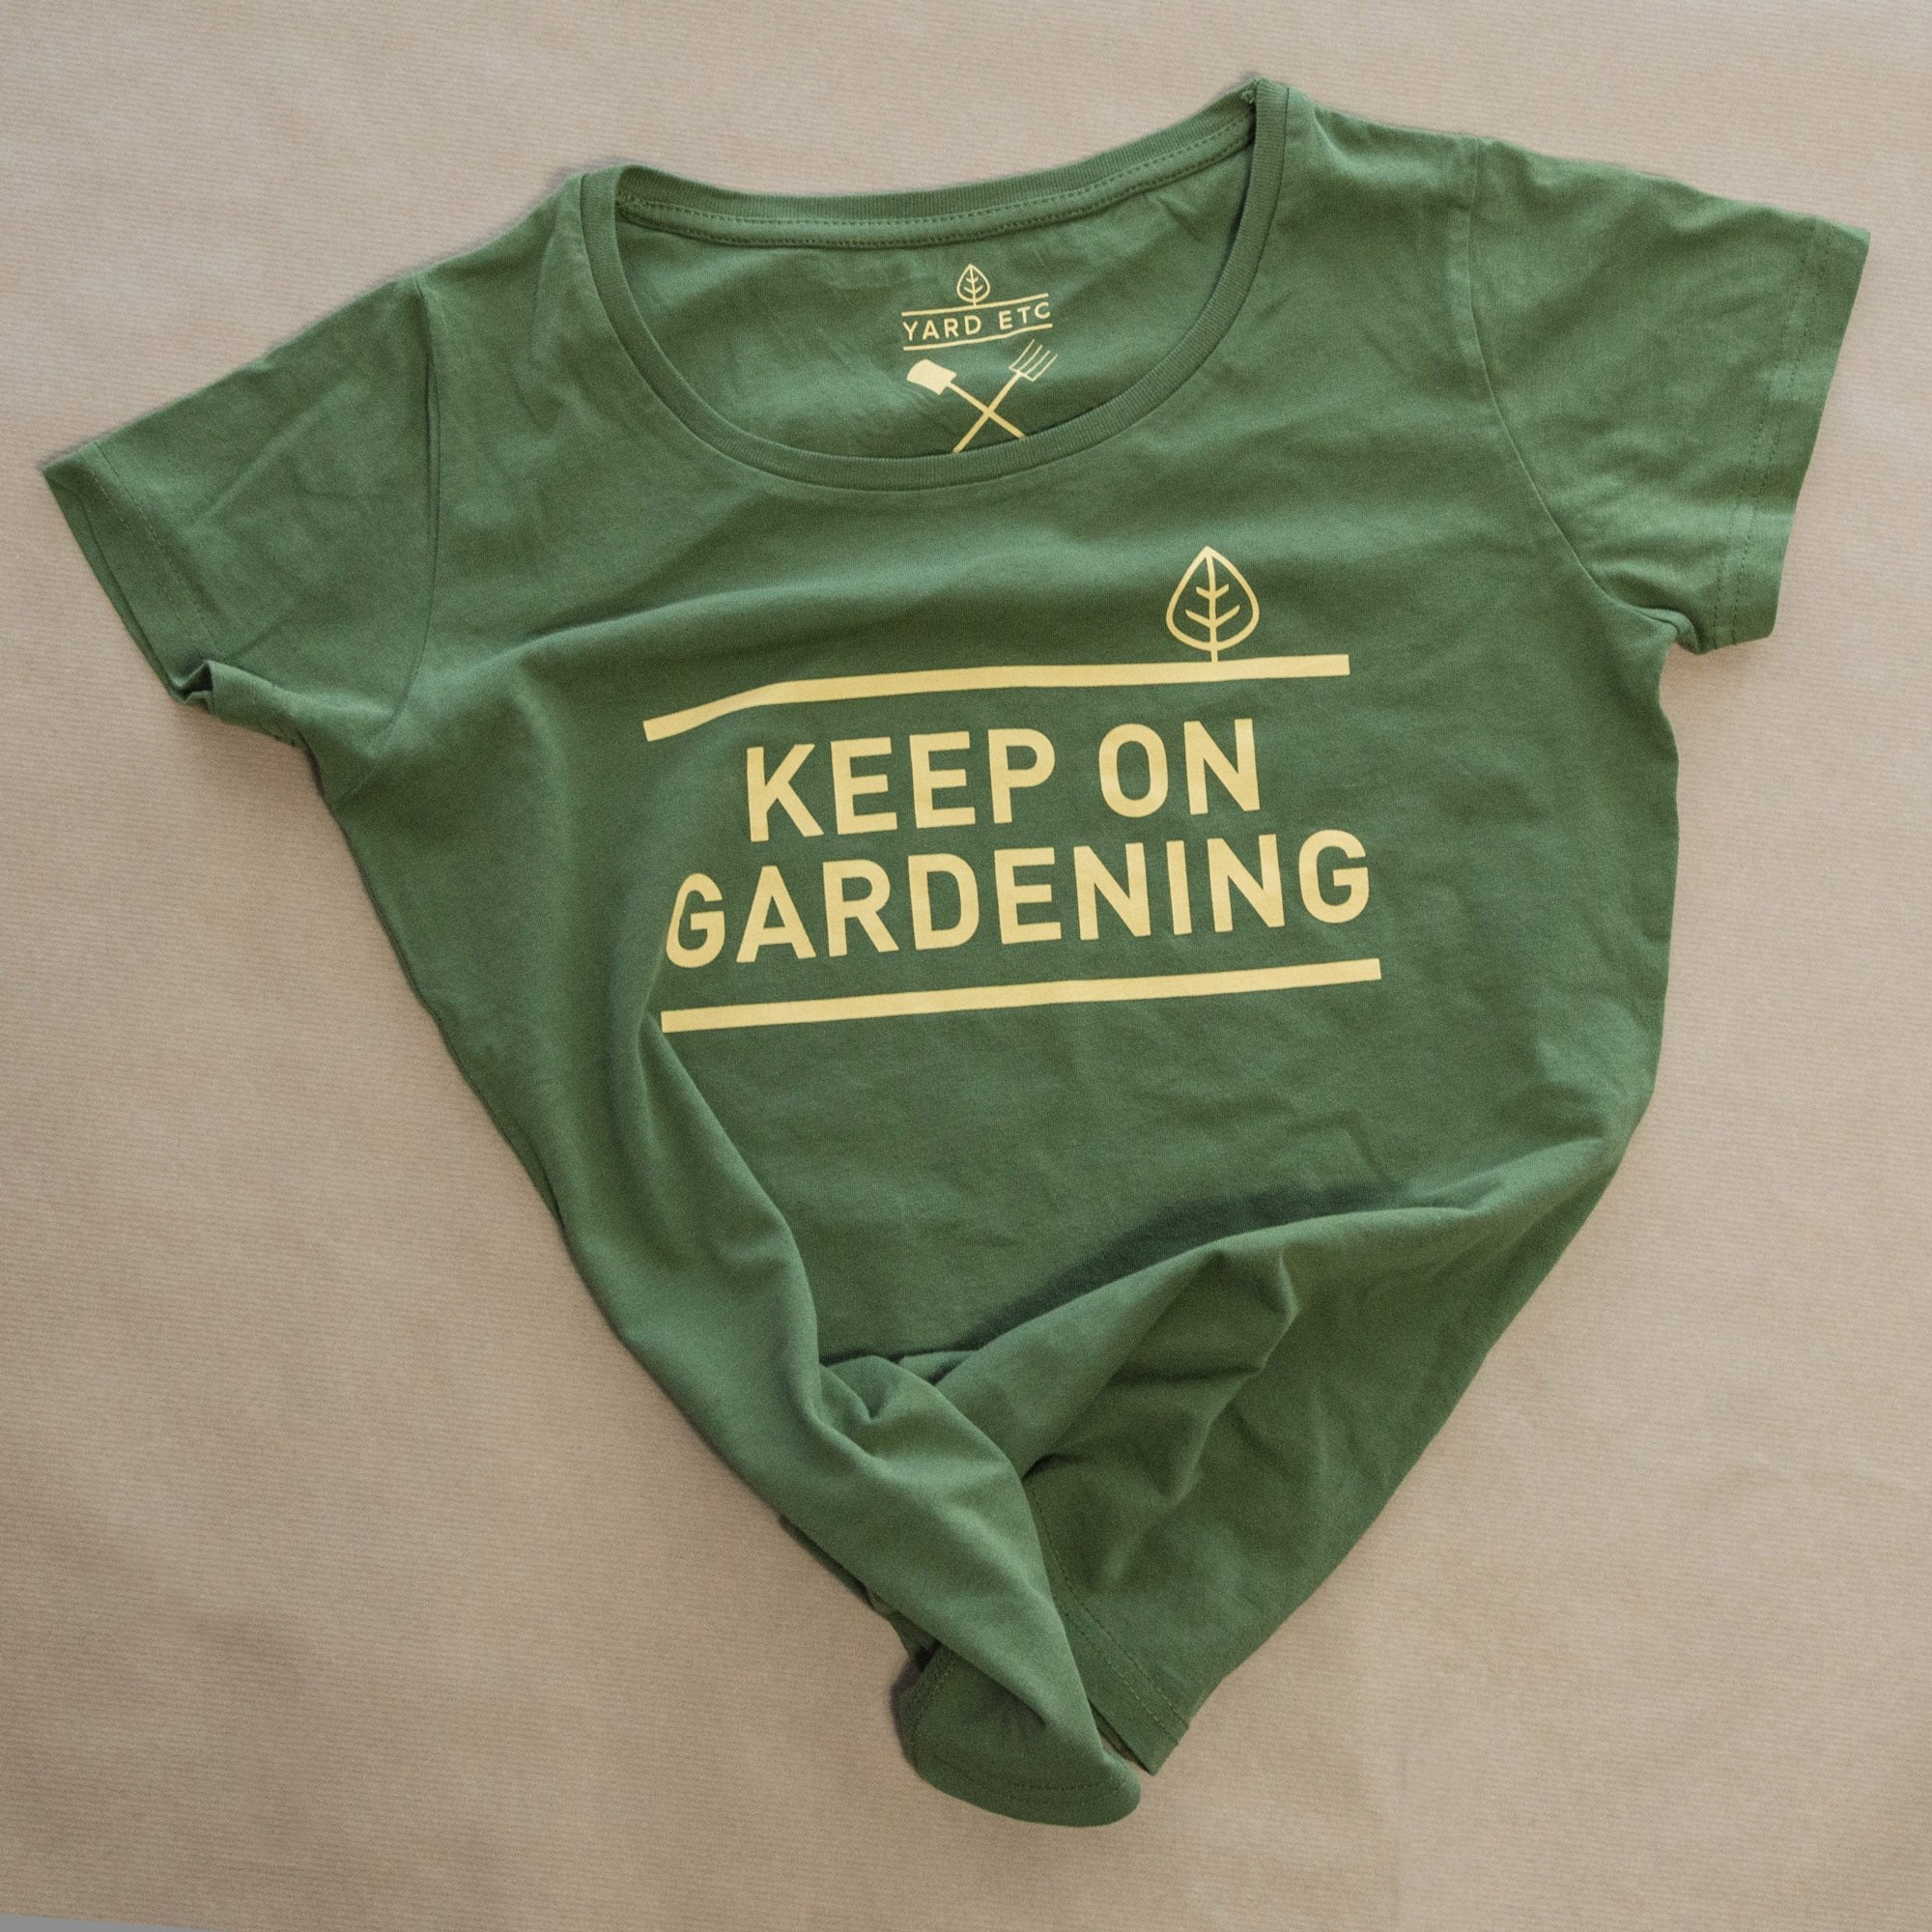 Yard Etc T-Shirt - Womens GREEN